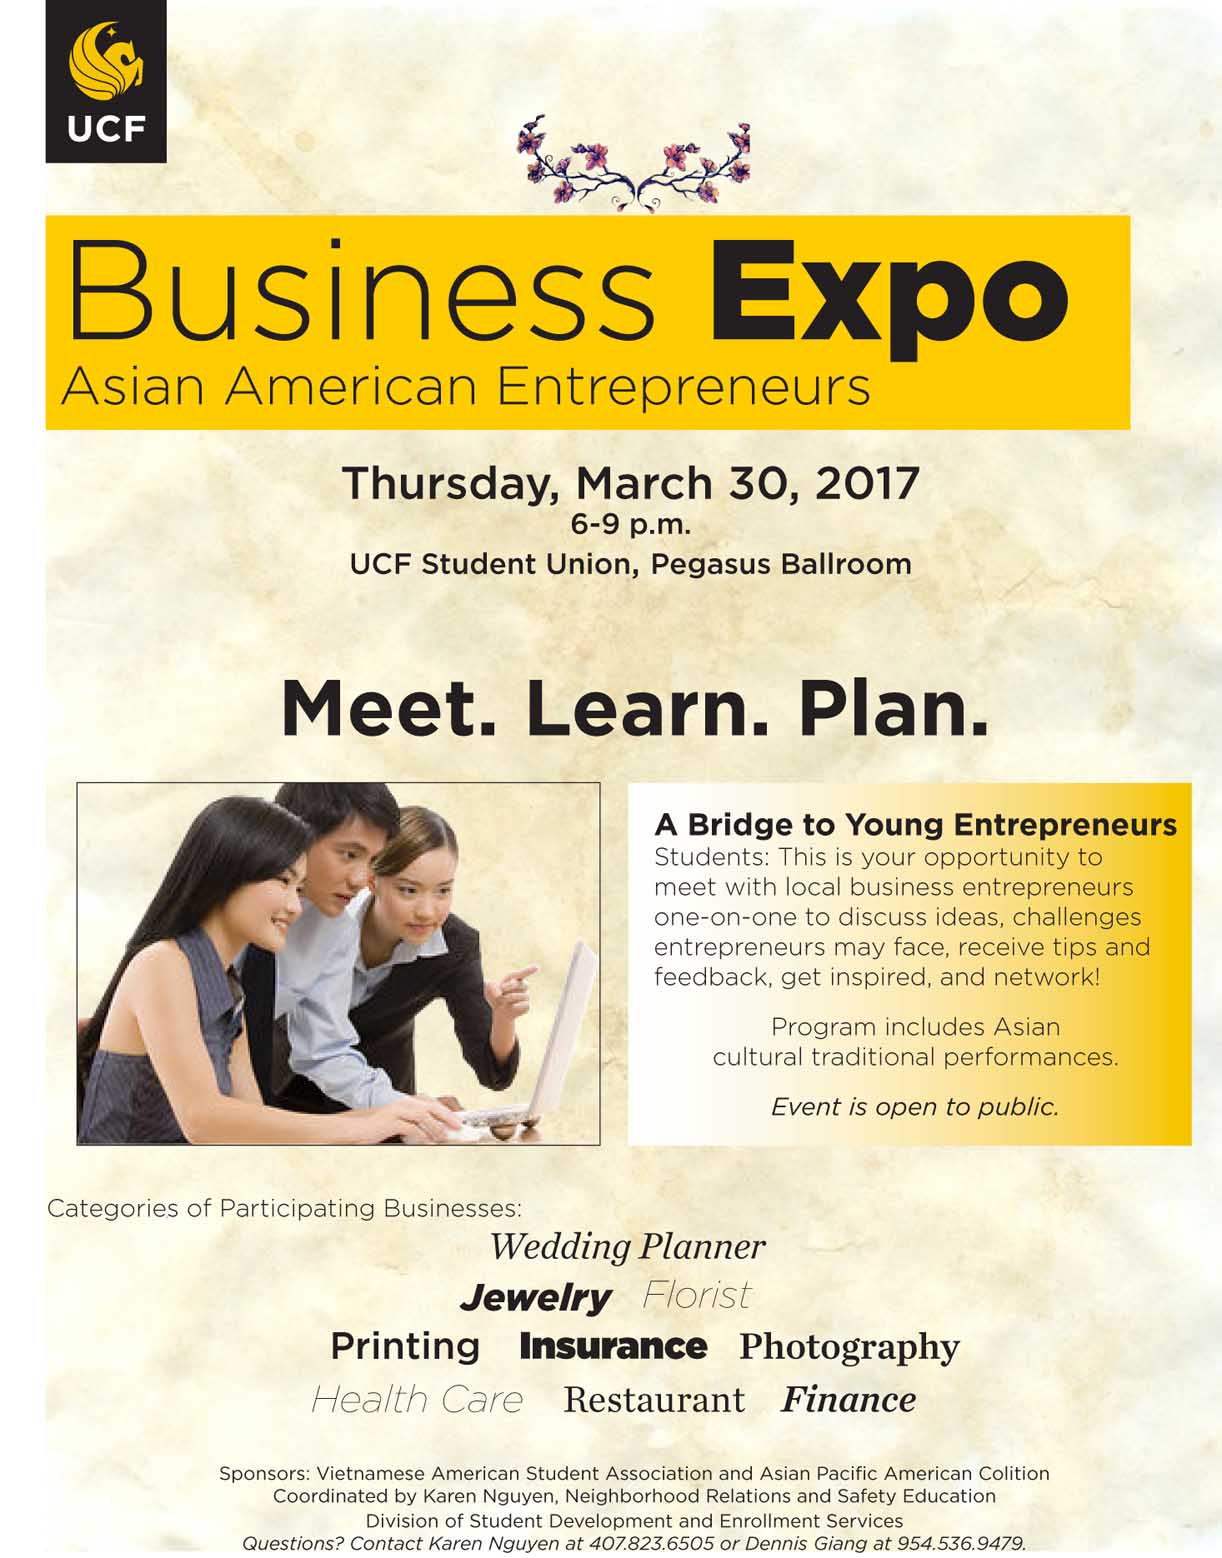 Business Expo Asian American Entrepreneurs